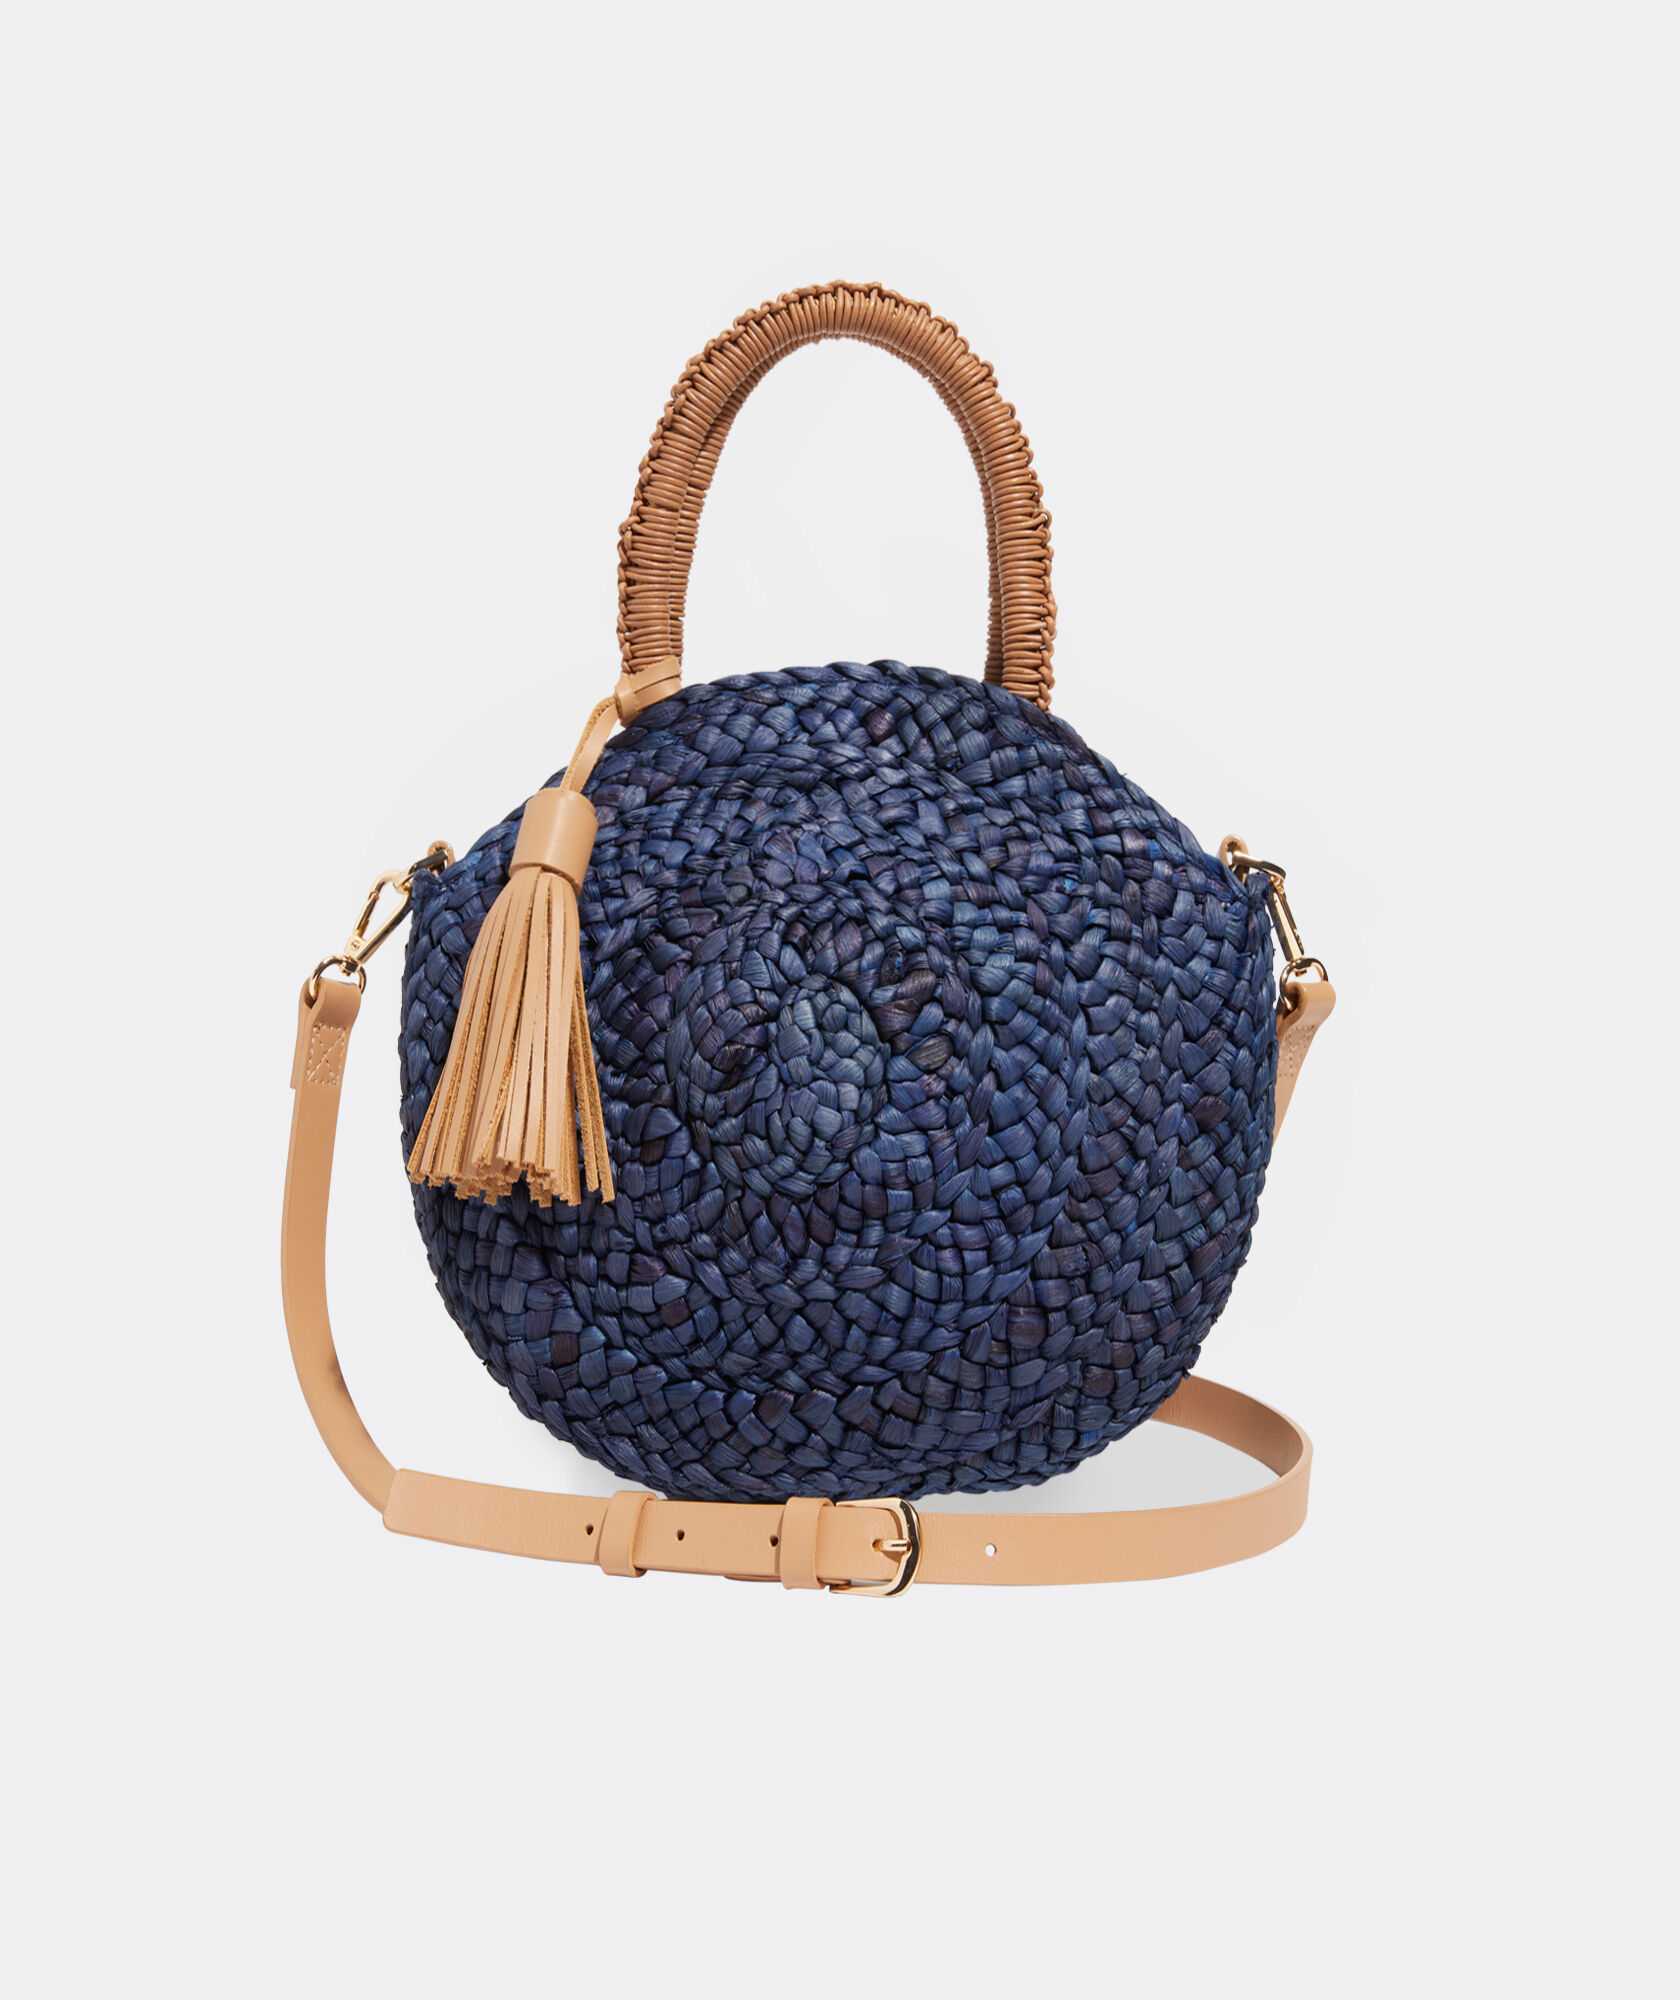 Handmade Round Rattan Bag Boho Shoulder Straw Bags Crossbody Beach Purse  Women | eBay